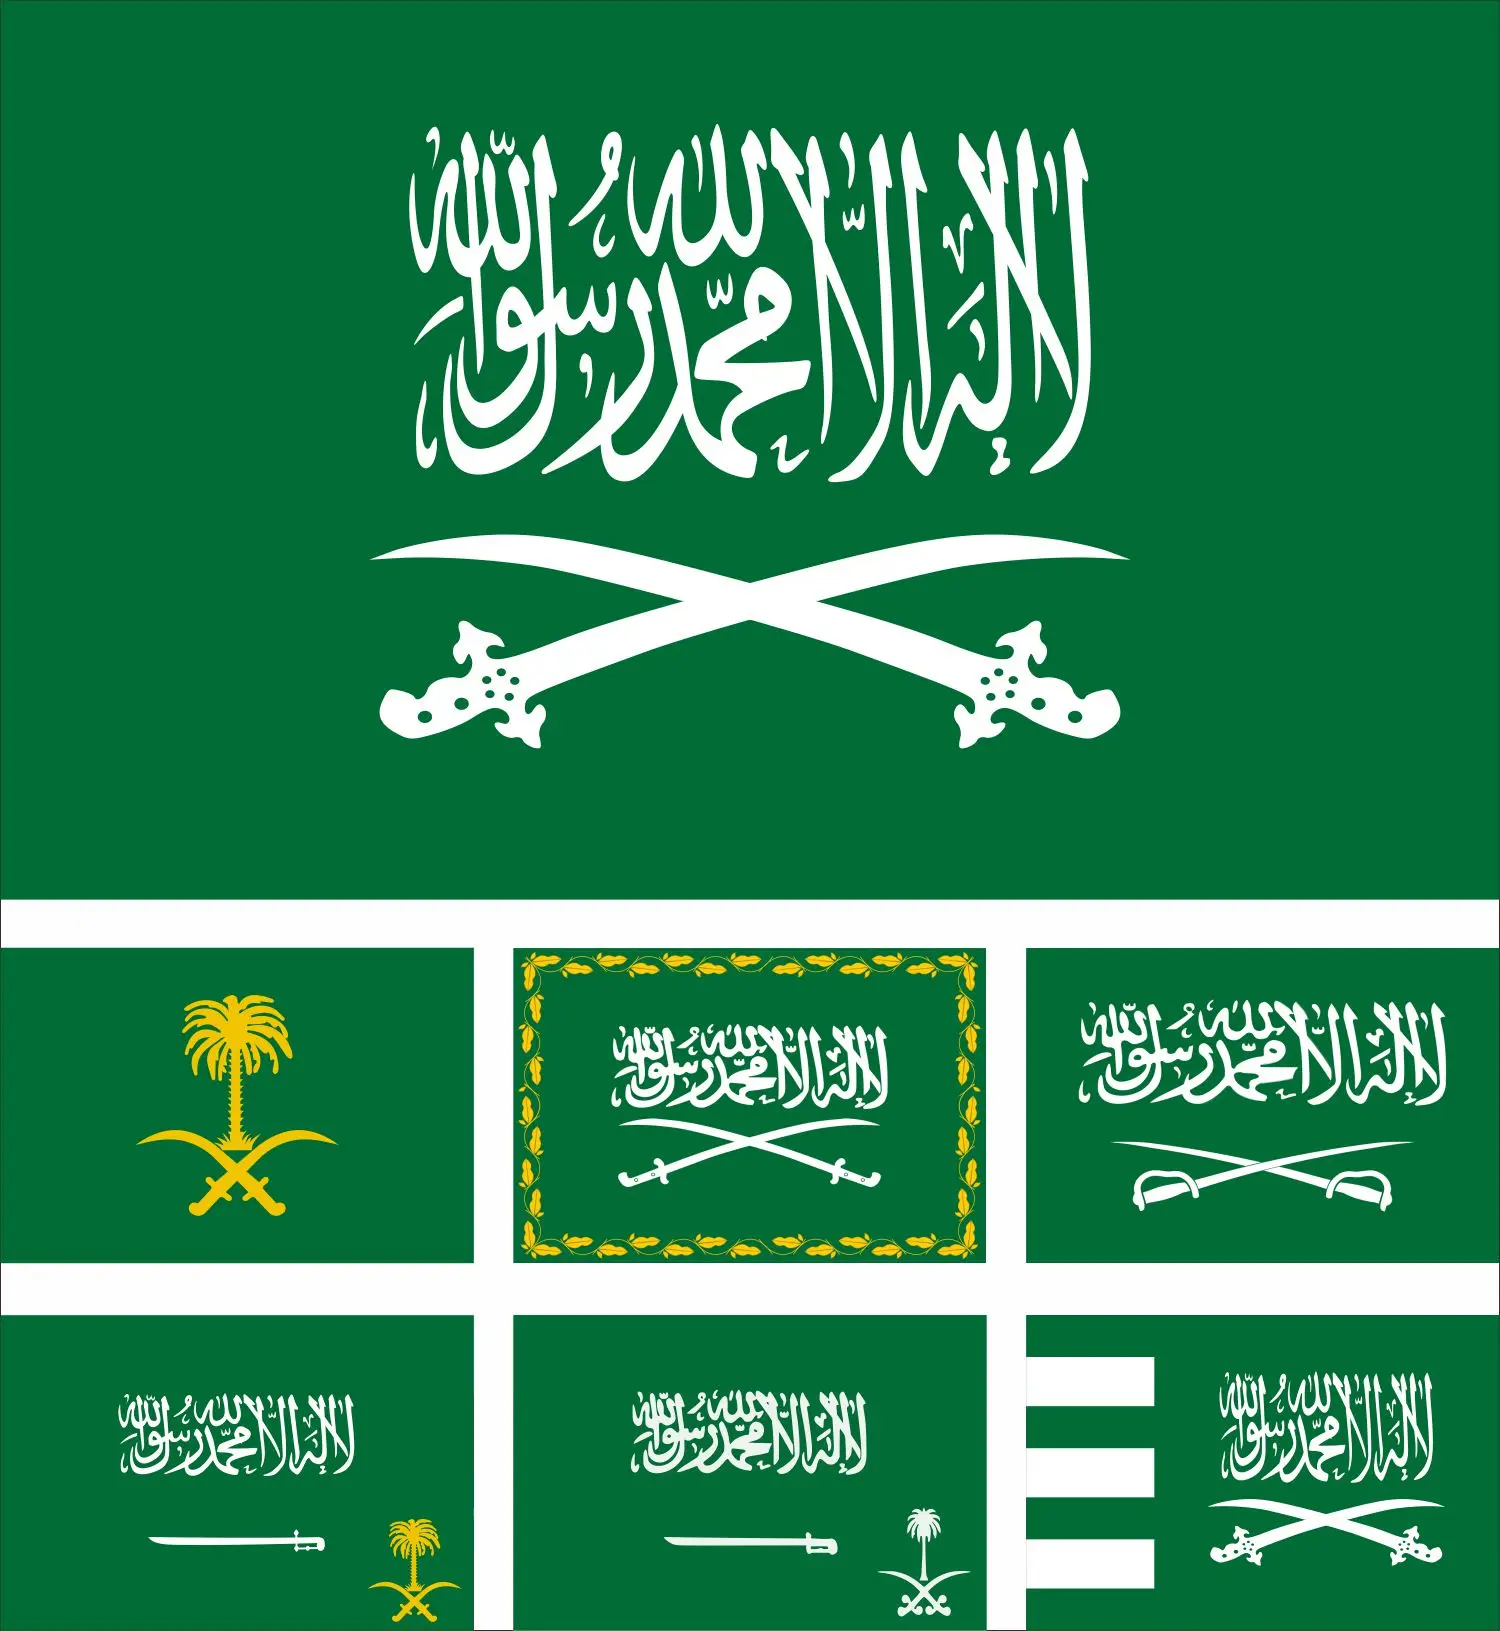 

Saudi Arabia Royal King 1953 Flag 3X5ft 90X150cm 60x90cm Royal Standard Crown Prince Banner Kingdom